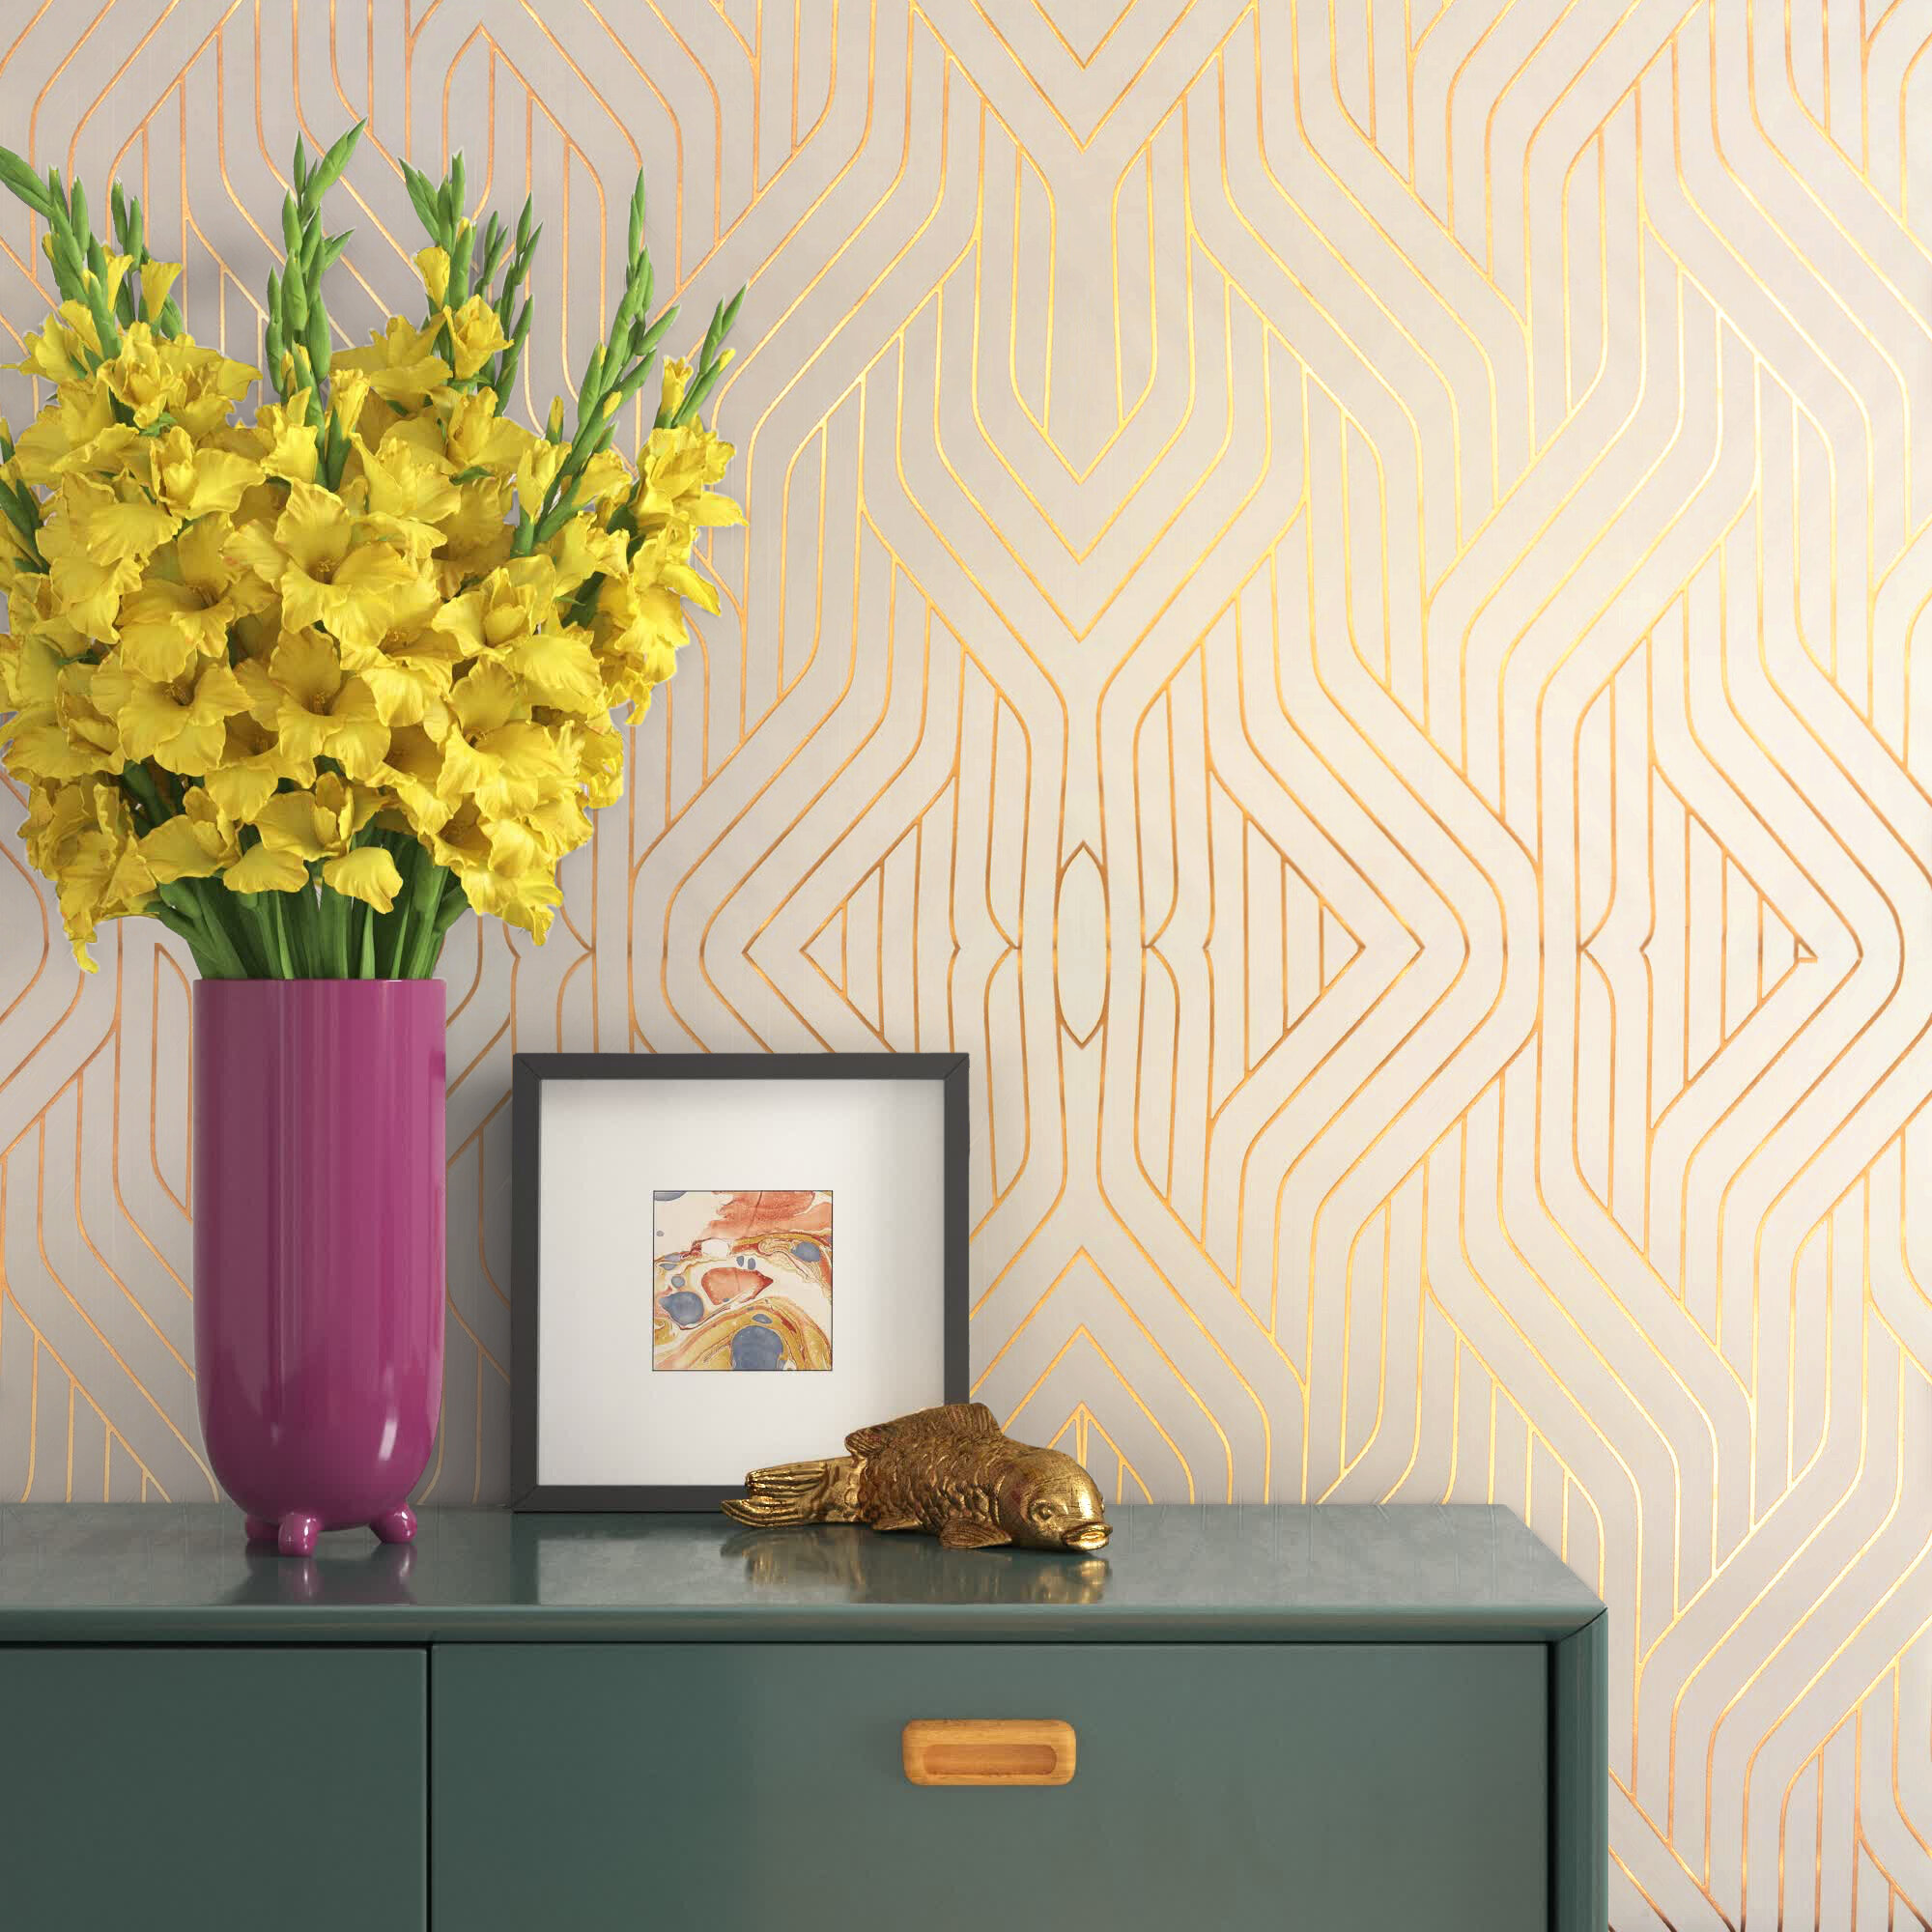 LV Inspired Black/Yellow Gold 3D Wallpaper - 5.3 Sqm